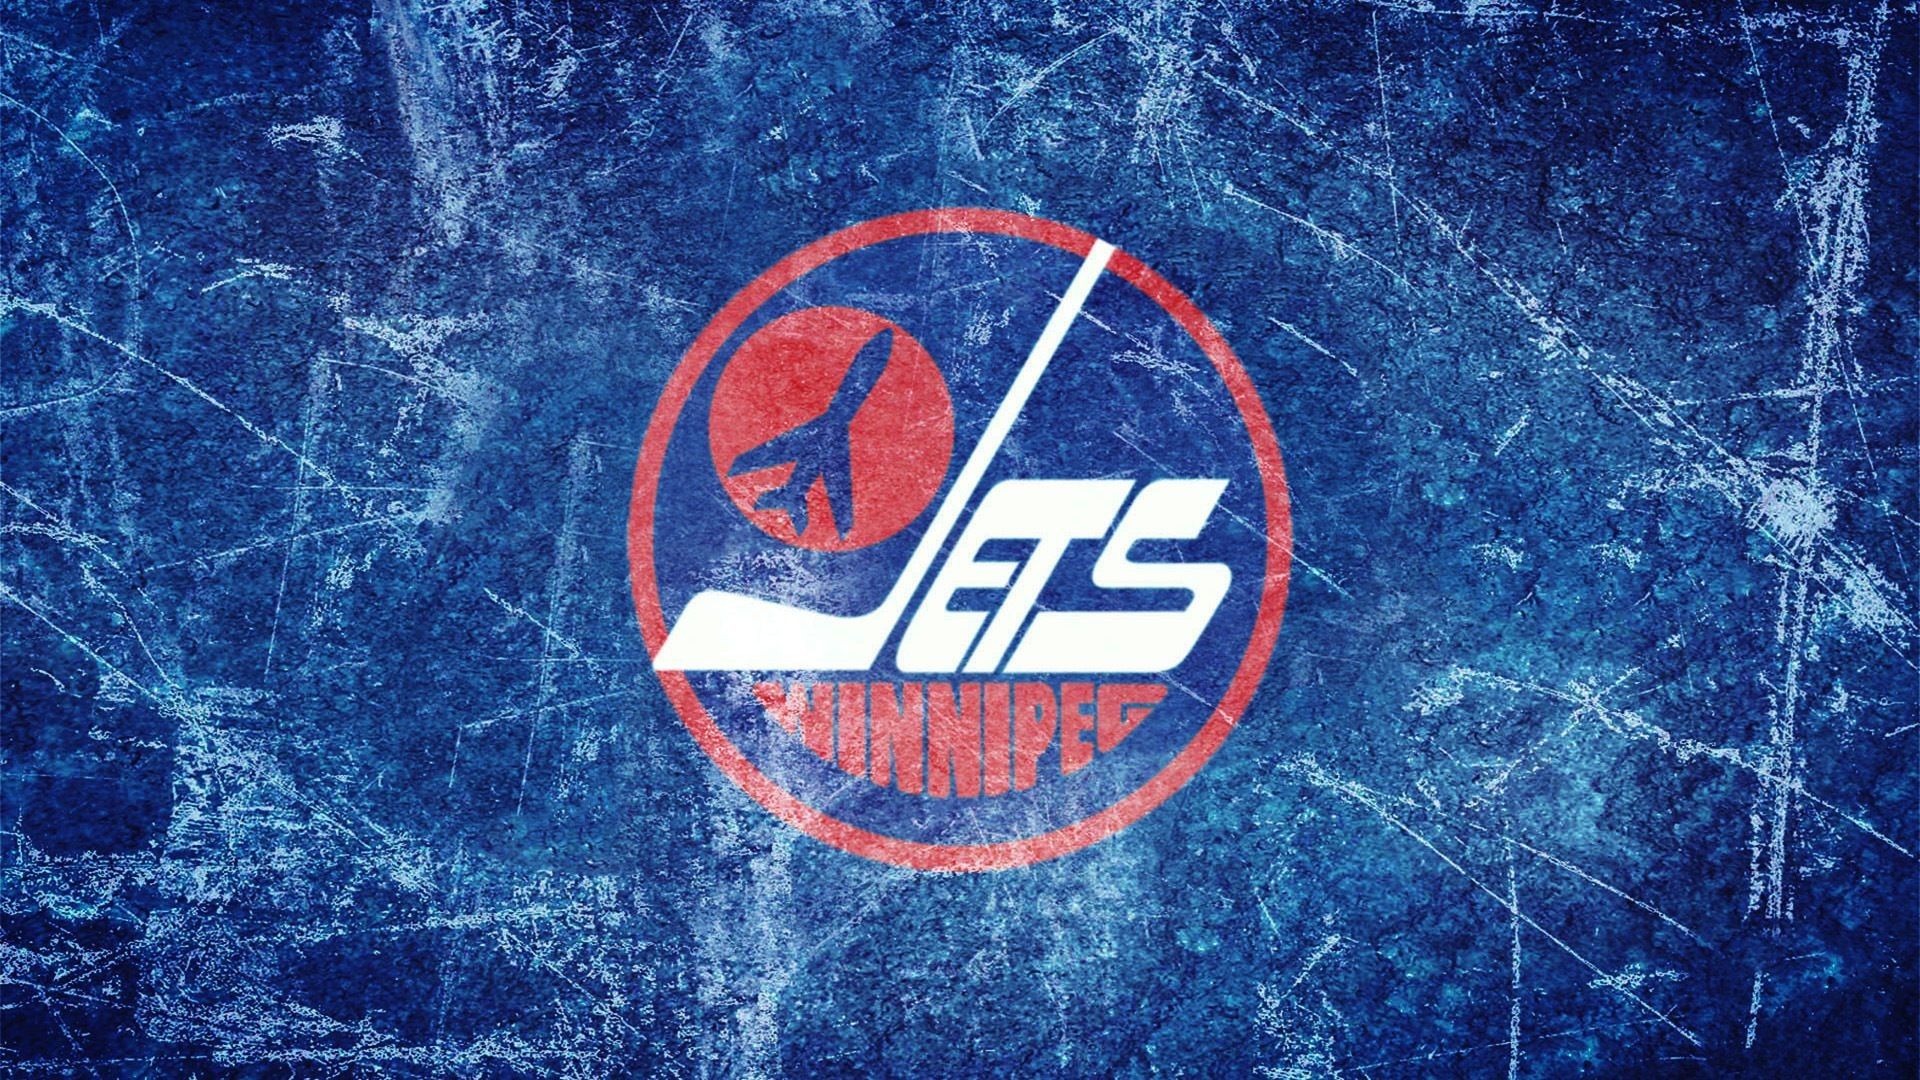 Winnipeg Jets Wallpaper background picture